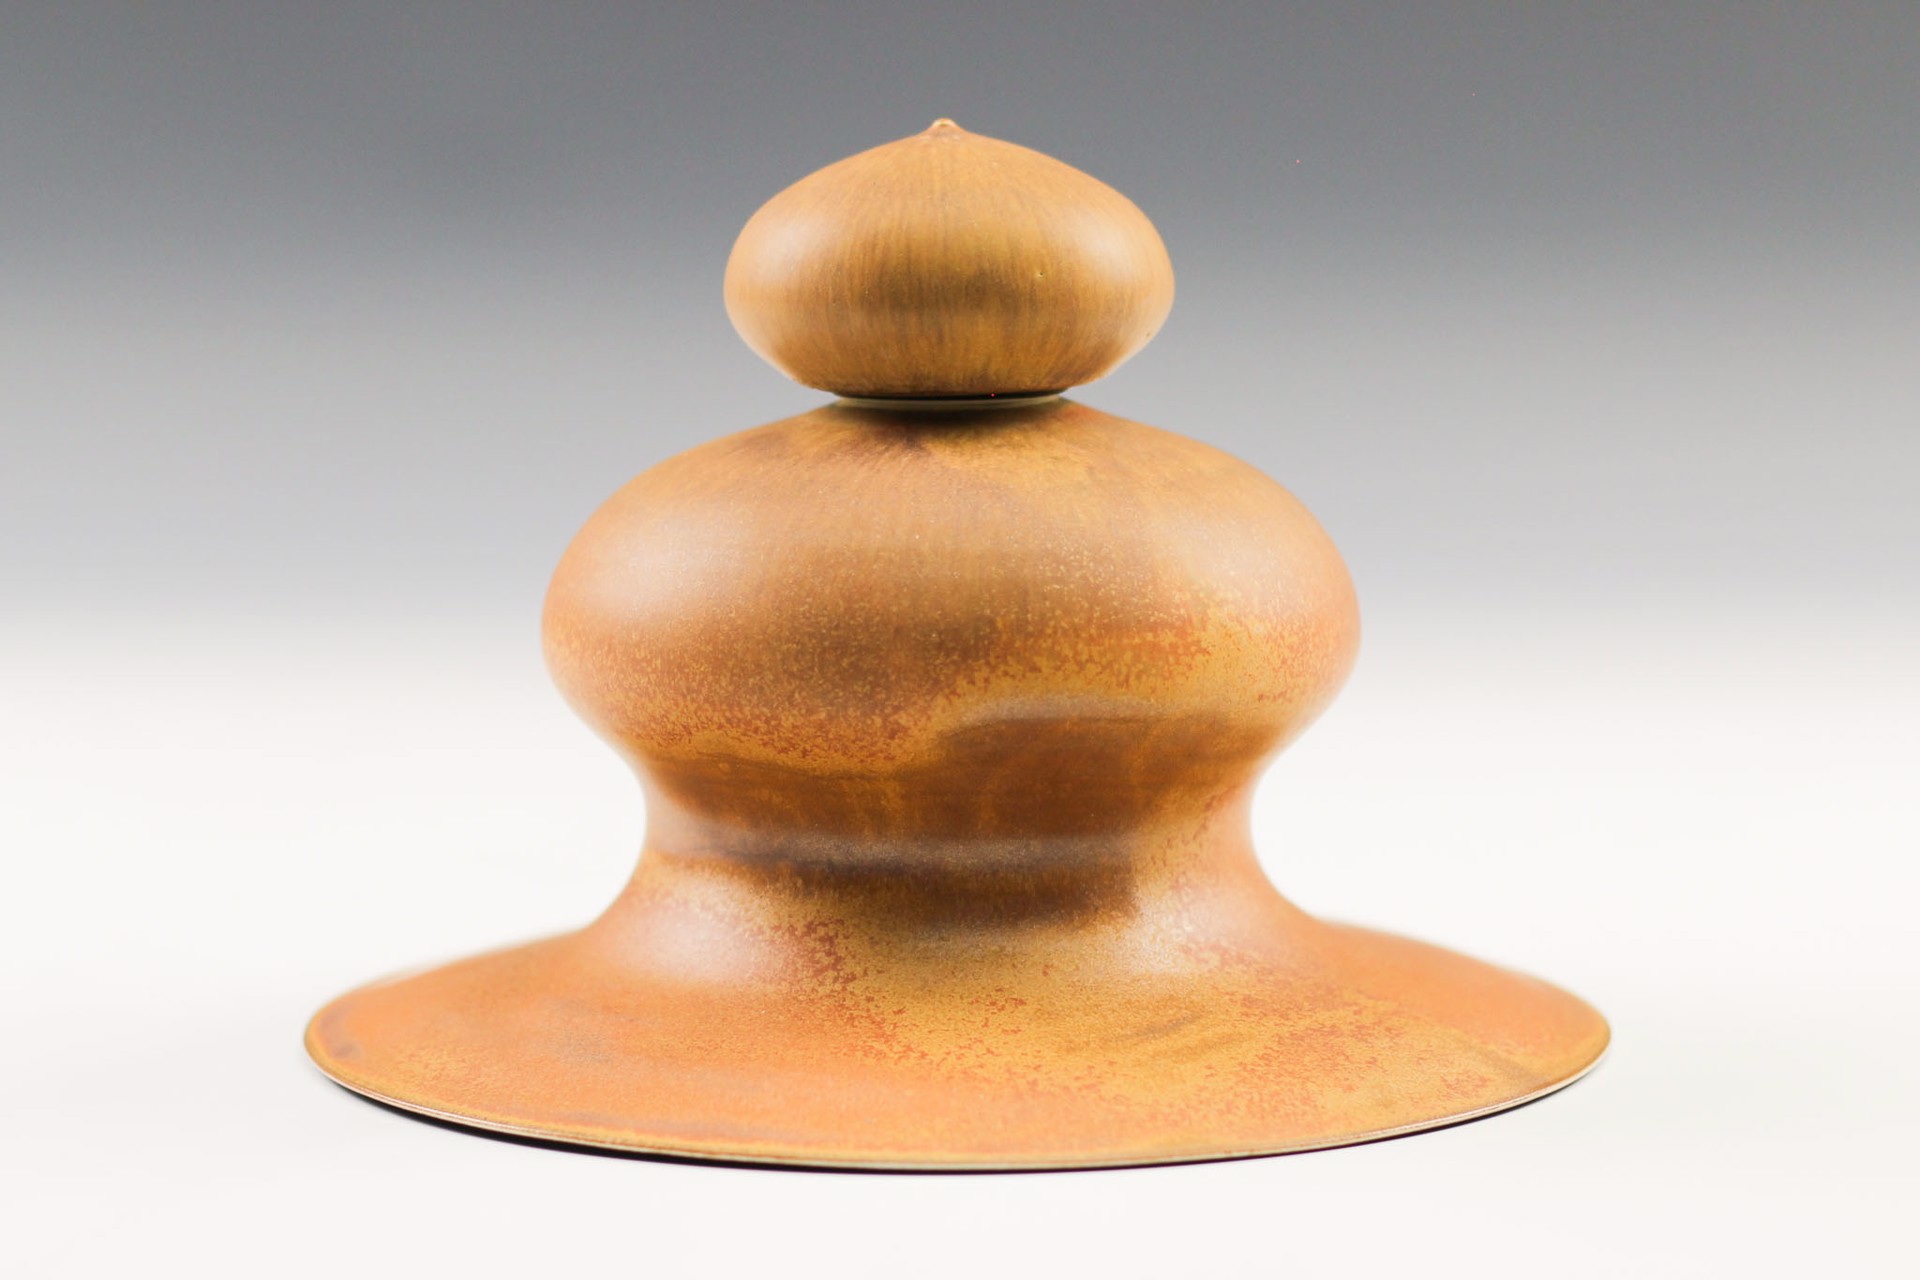 Rust "Bell" Jar by Charlie Olson